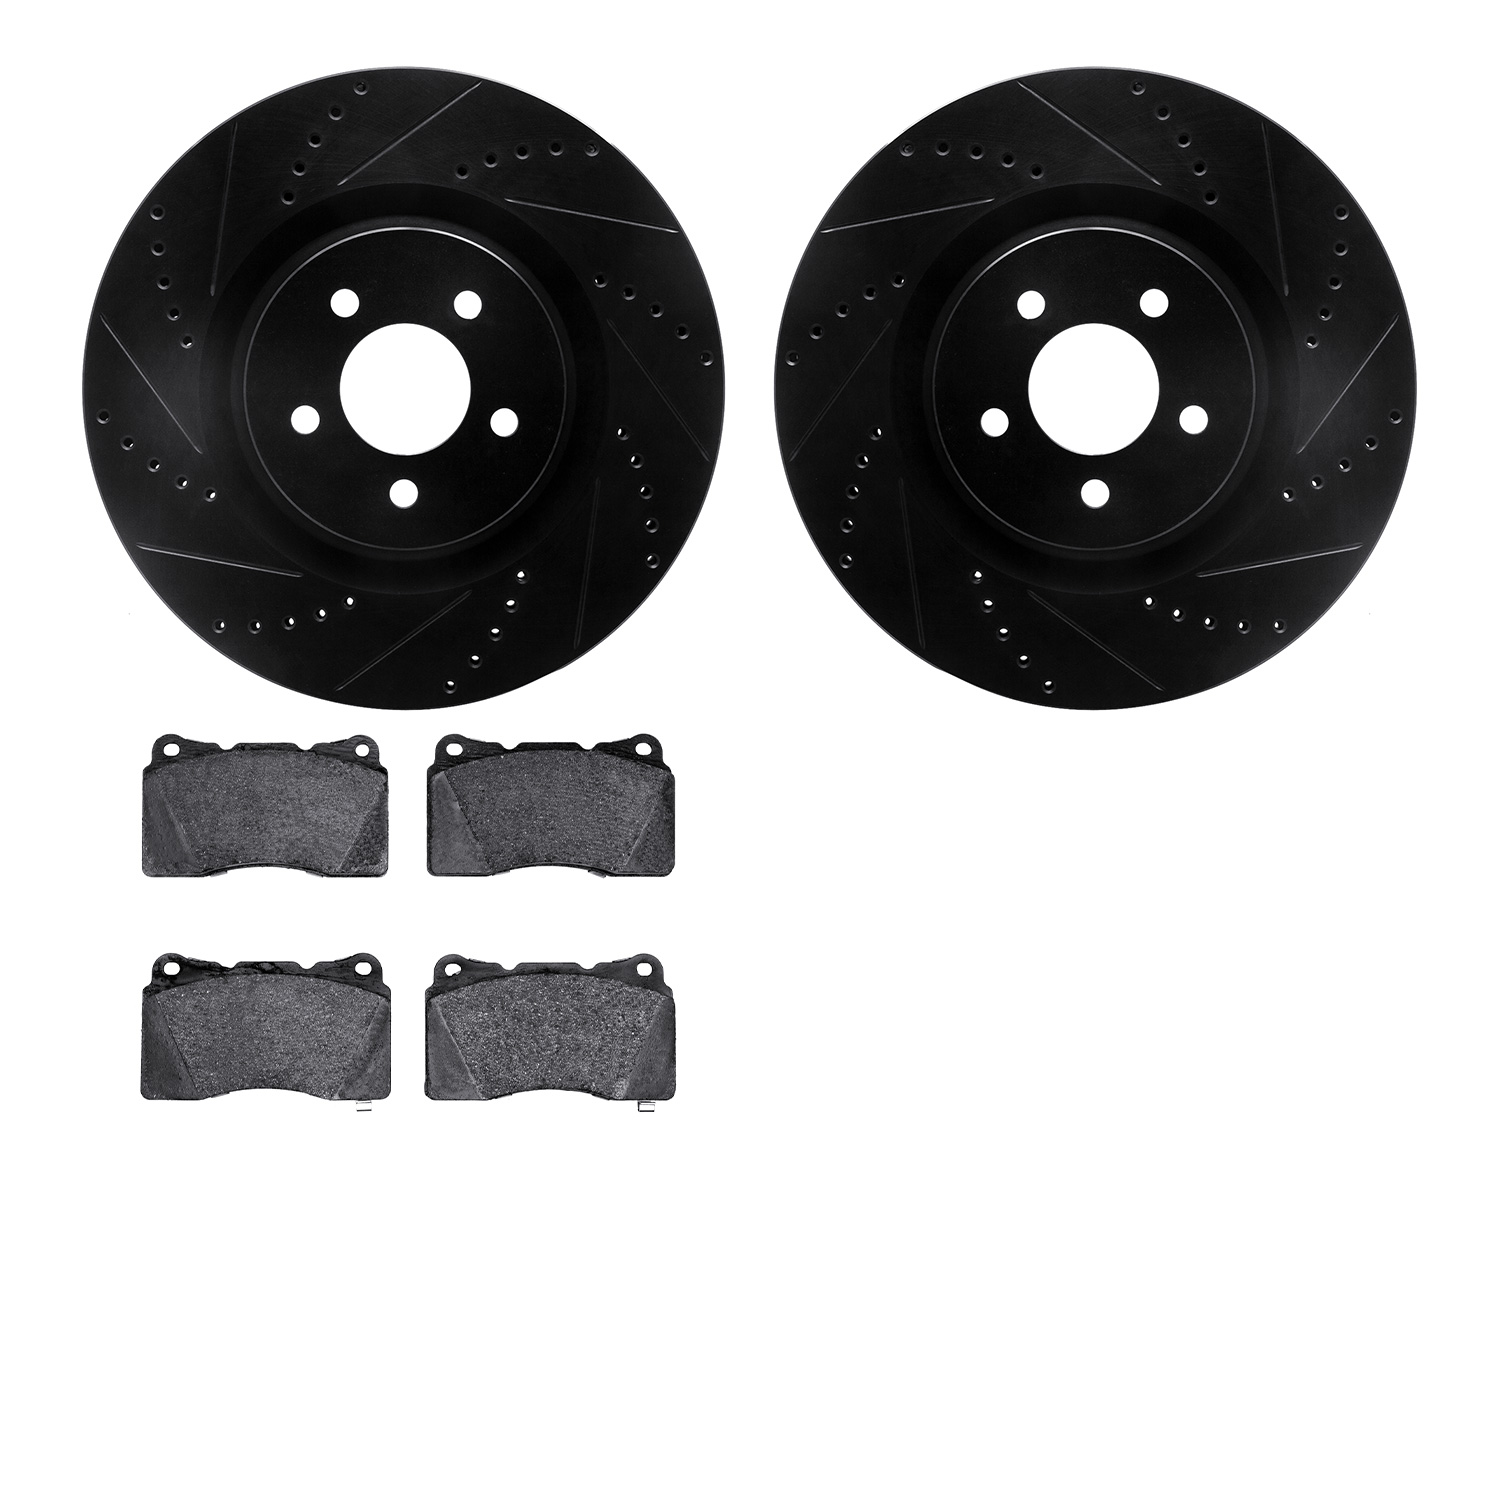 8302-54154 Drilled/Slotted Brake Rotors with 3000-Series Ceramic Brake Pads Kit [Black], 2007-2014 Ford/Lincoln/Mercury/Mazda, P